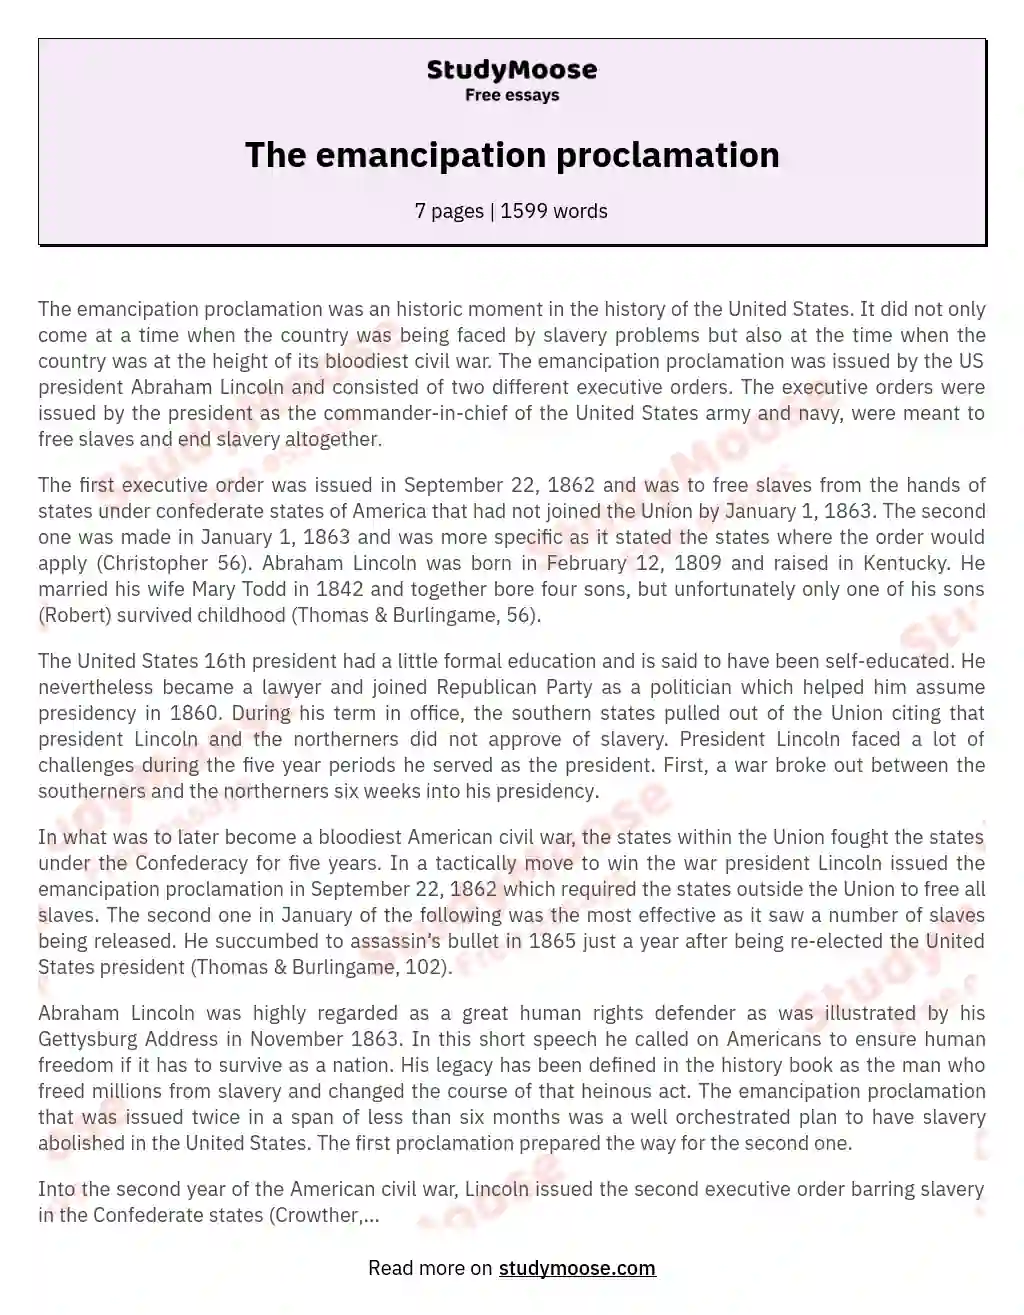 The emancipation proclamation essay